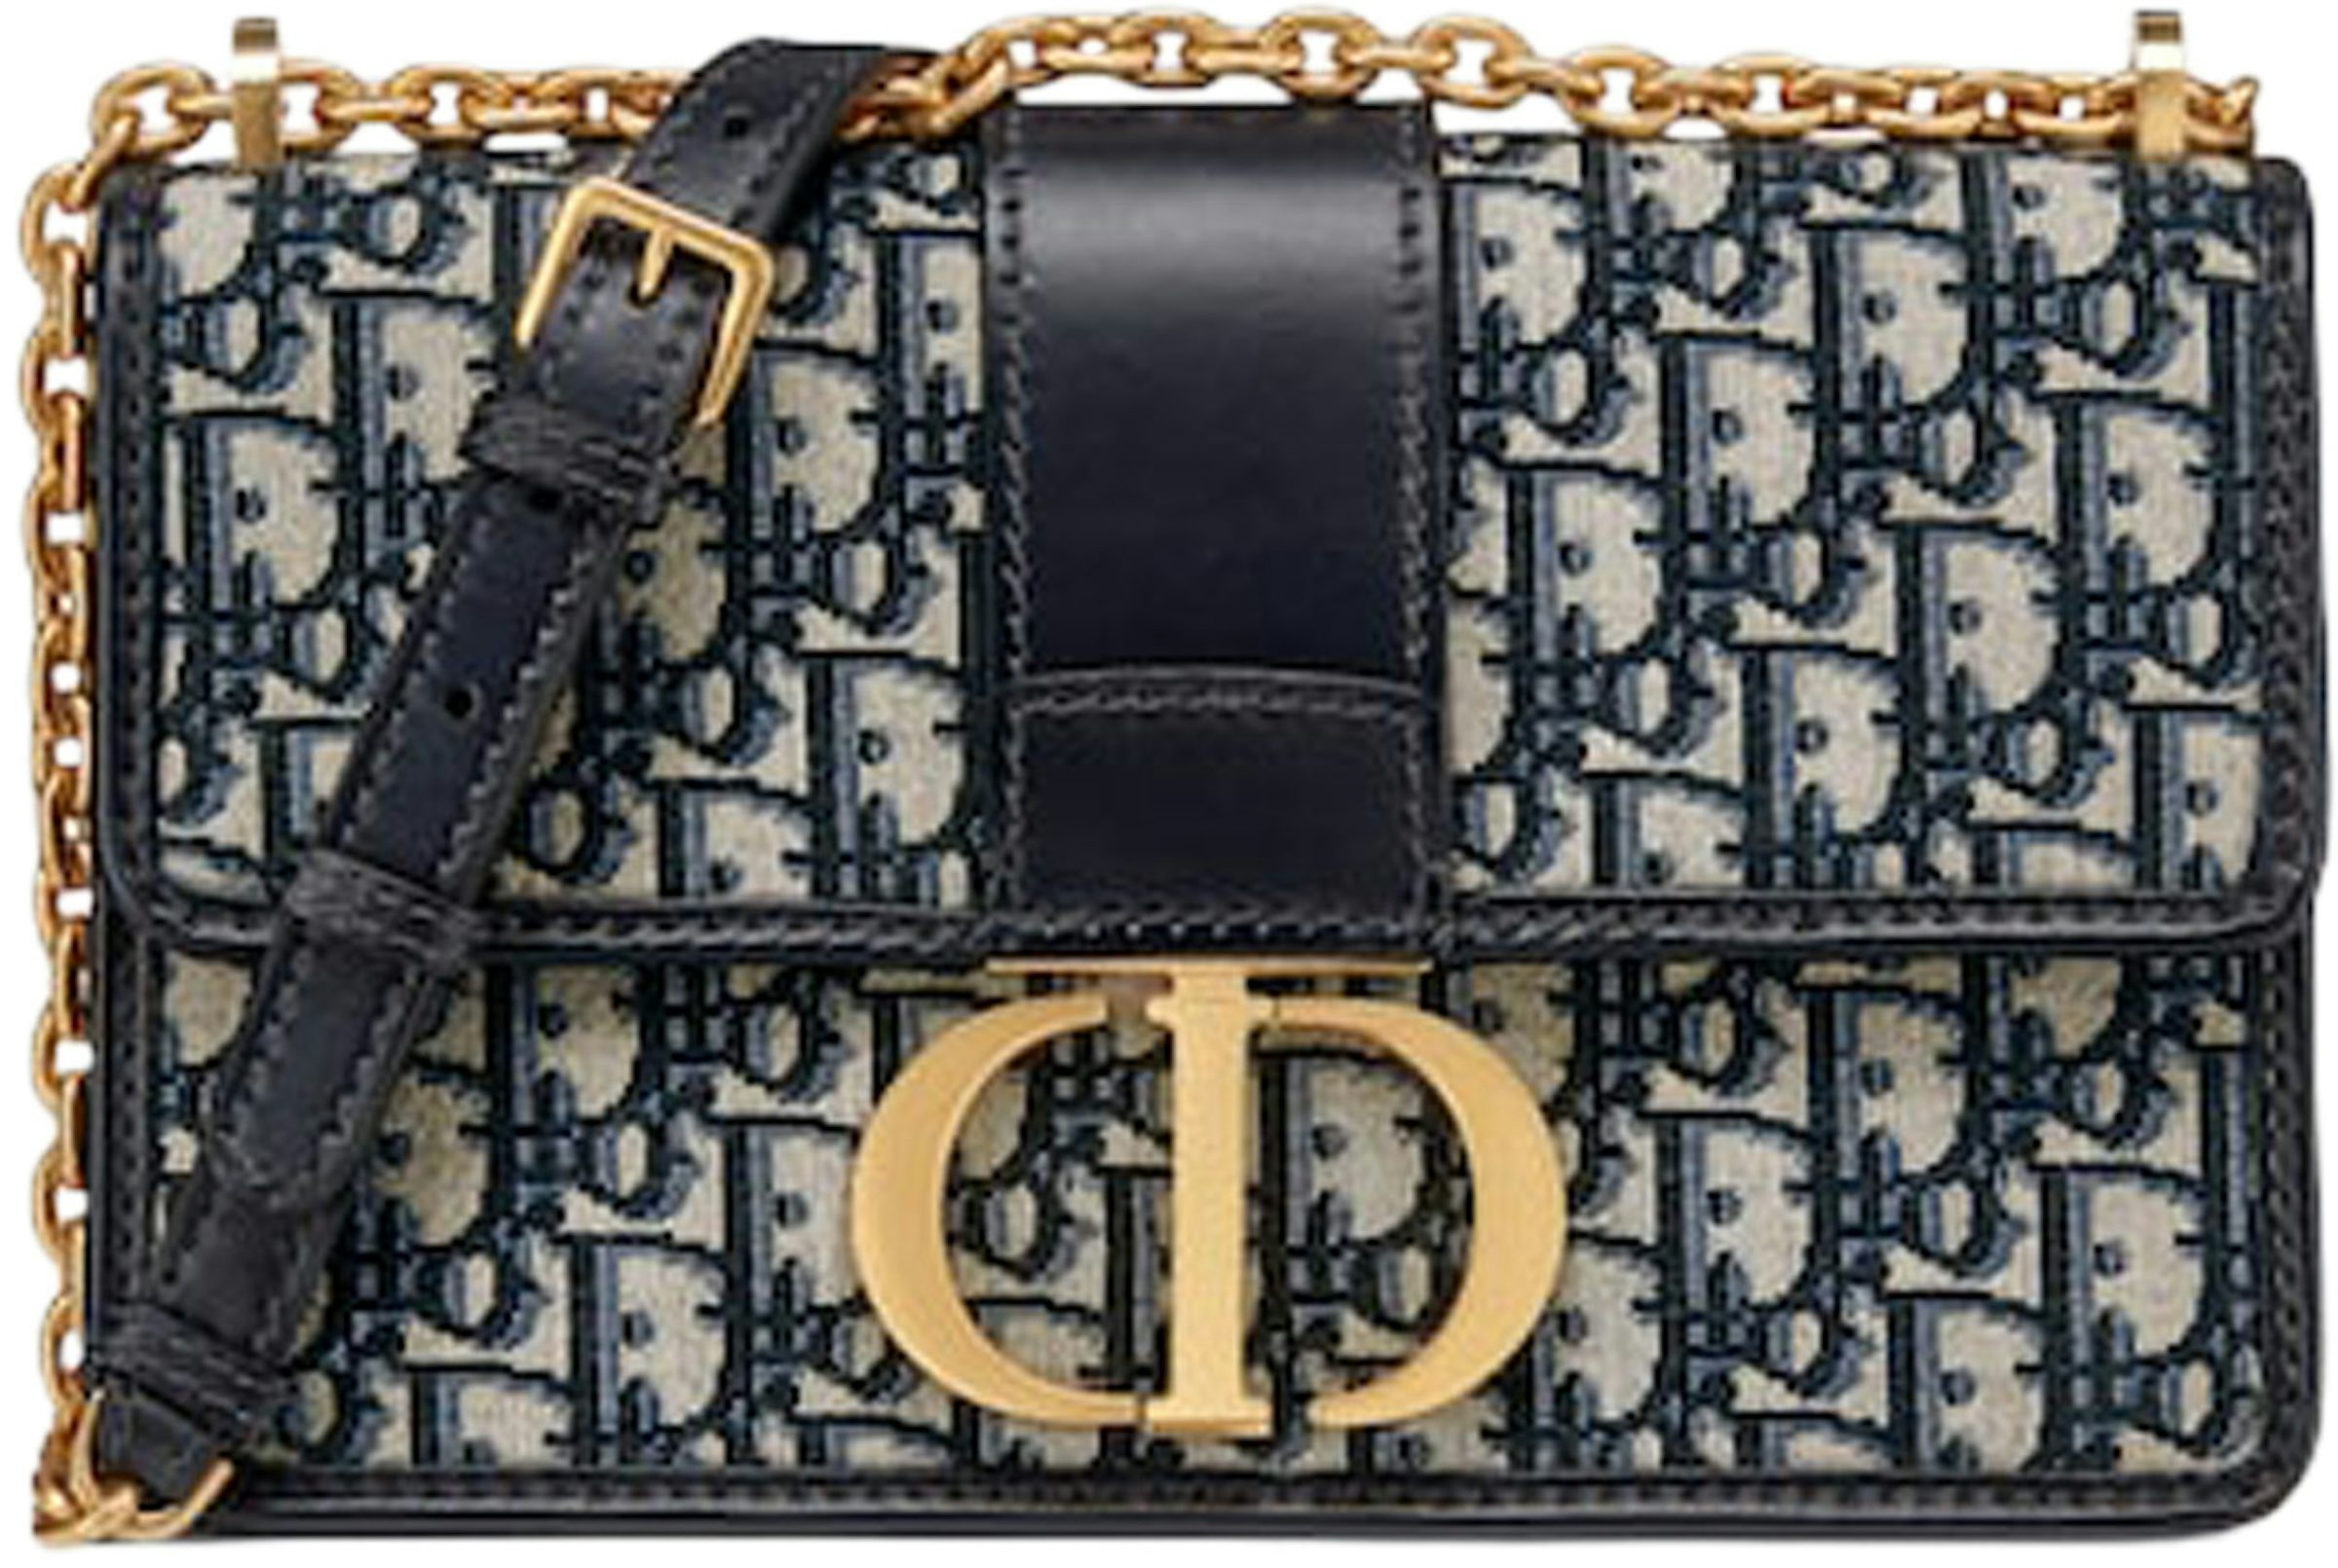 Dior 30 Montaigne Bag Blue Oblique Jacquard 3D model